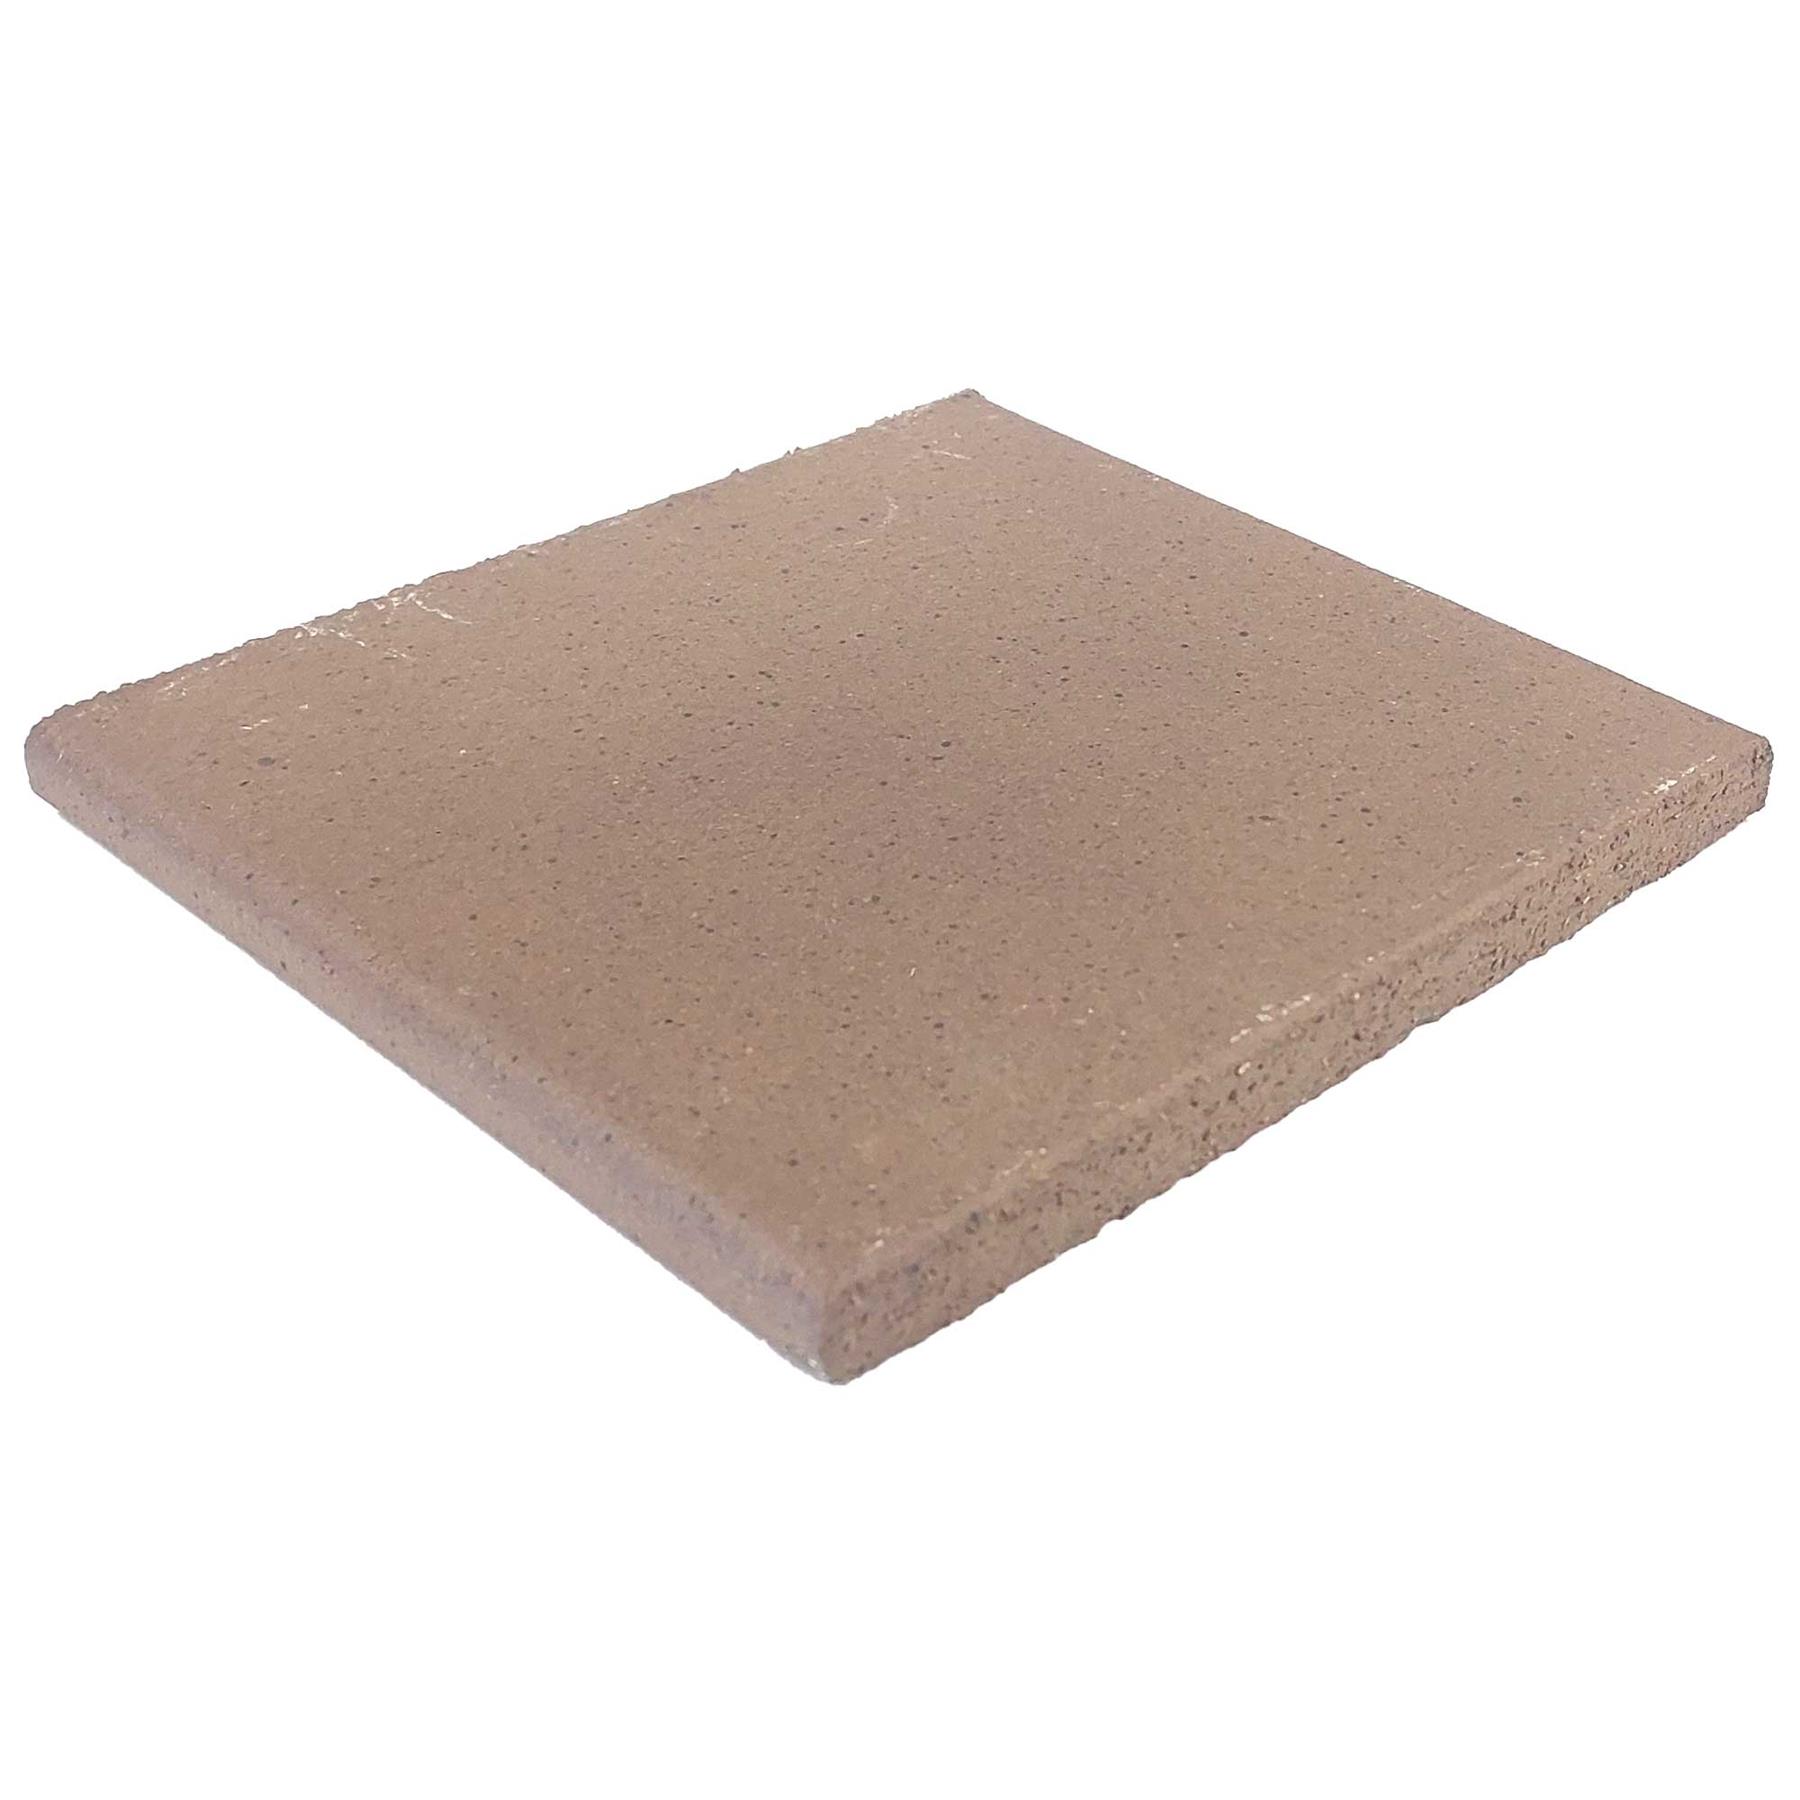 New Authentic Brown Quarry Tiles Round Edge 150x150mm